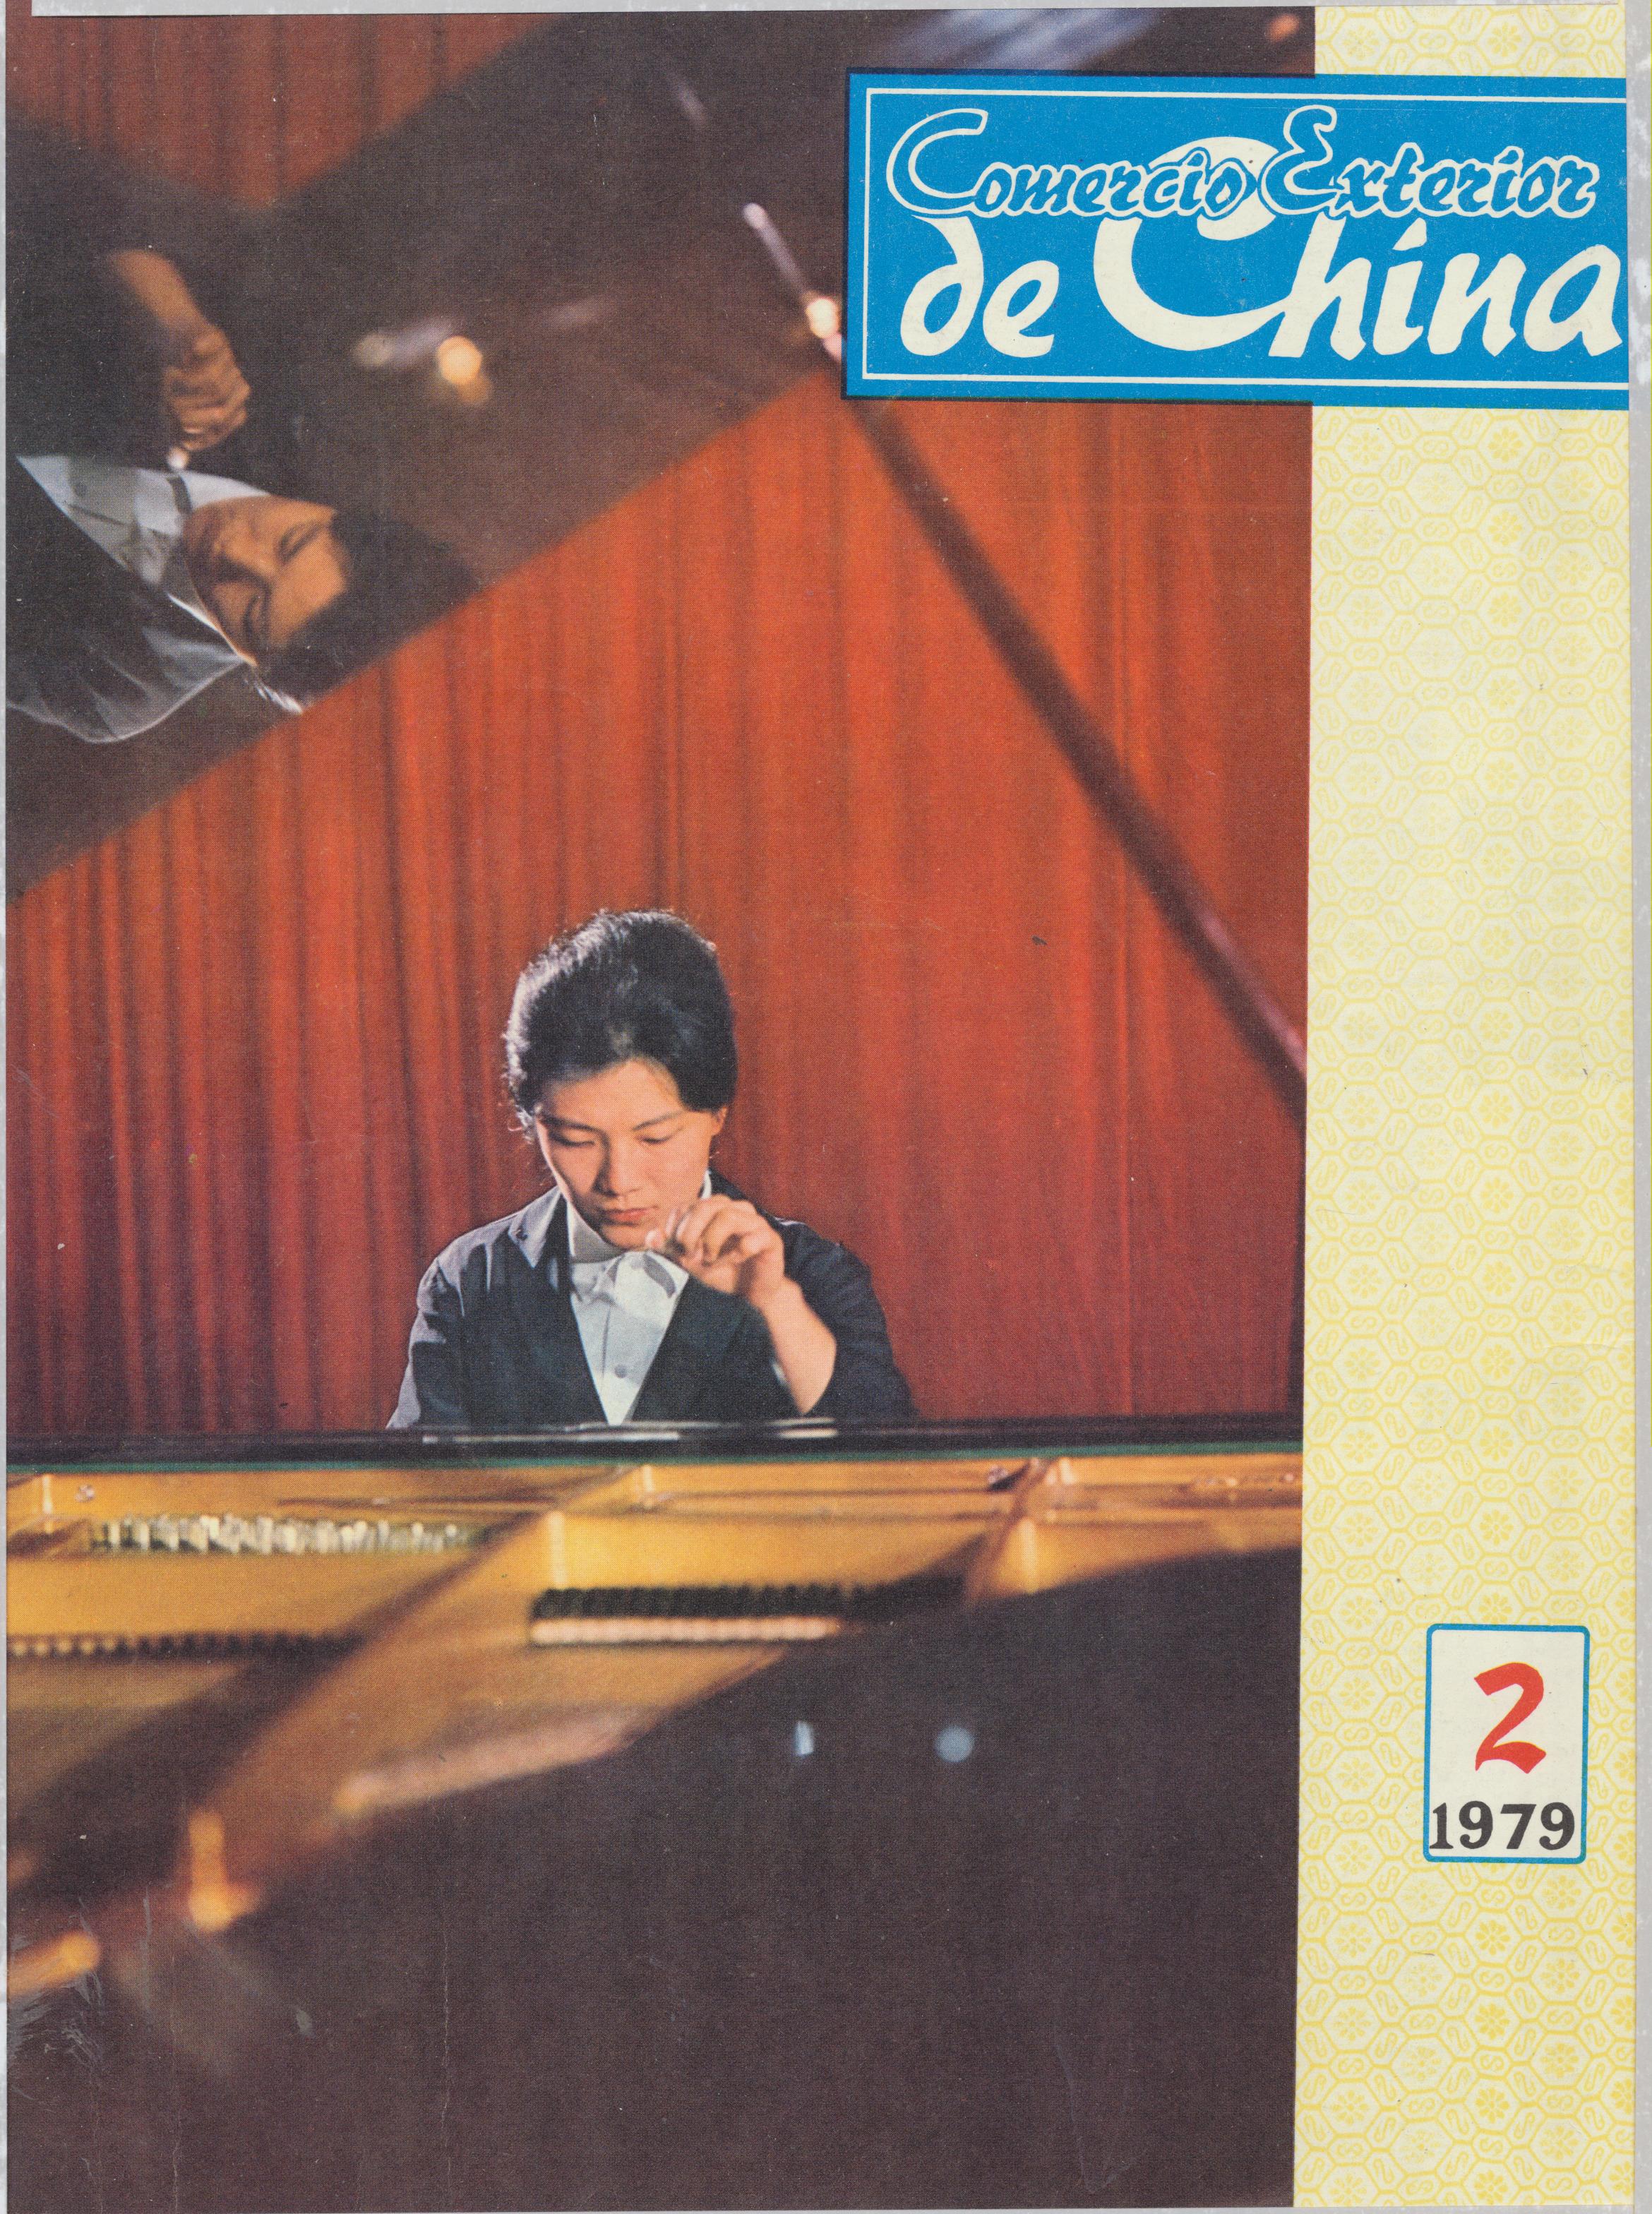 Revista Comercio Exterior de China nº 2. Año 1979